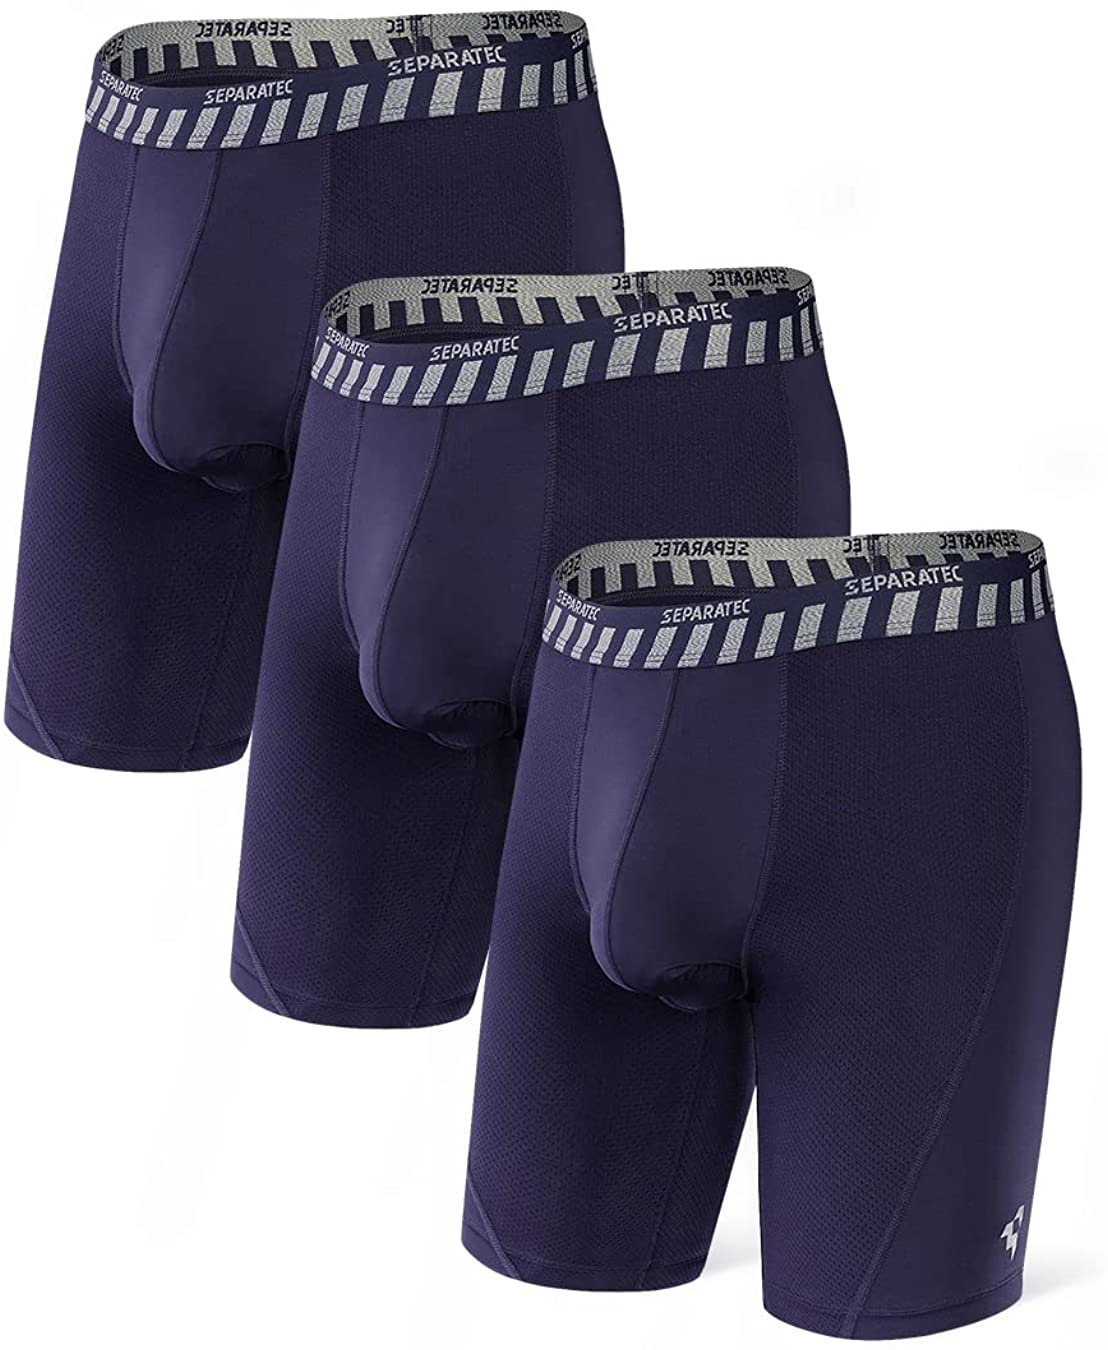 Separatec Men's Dual Pouch Underwear Comfort India